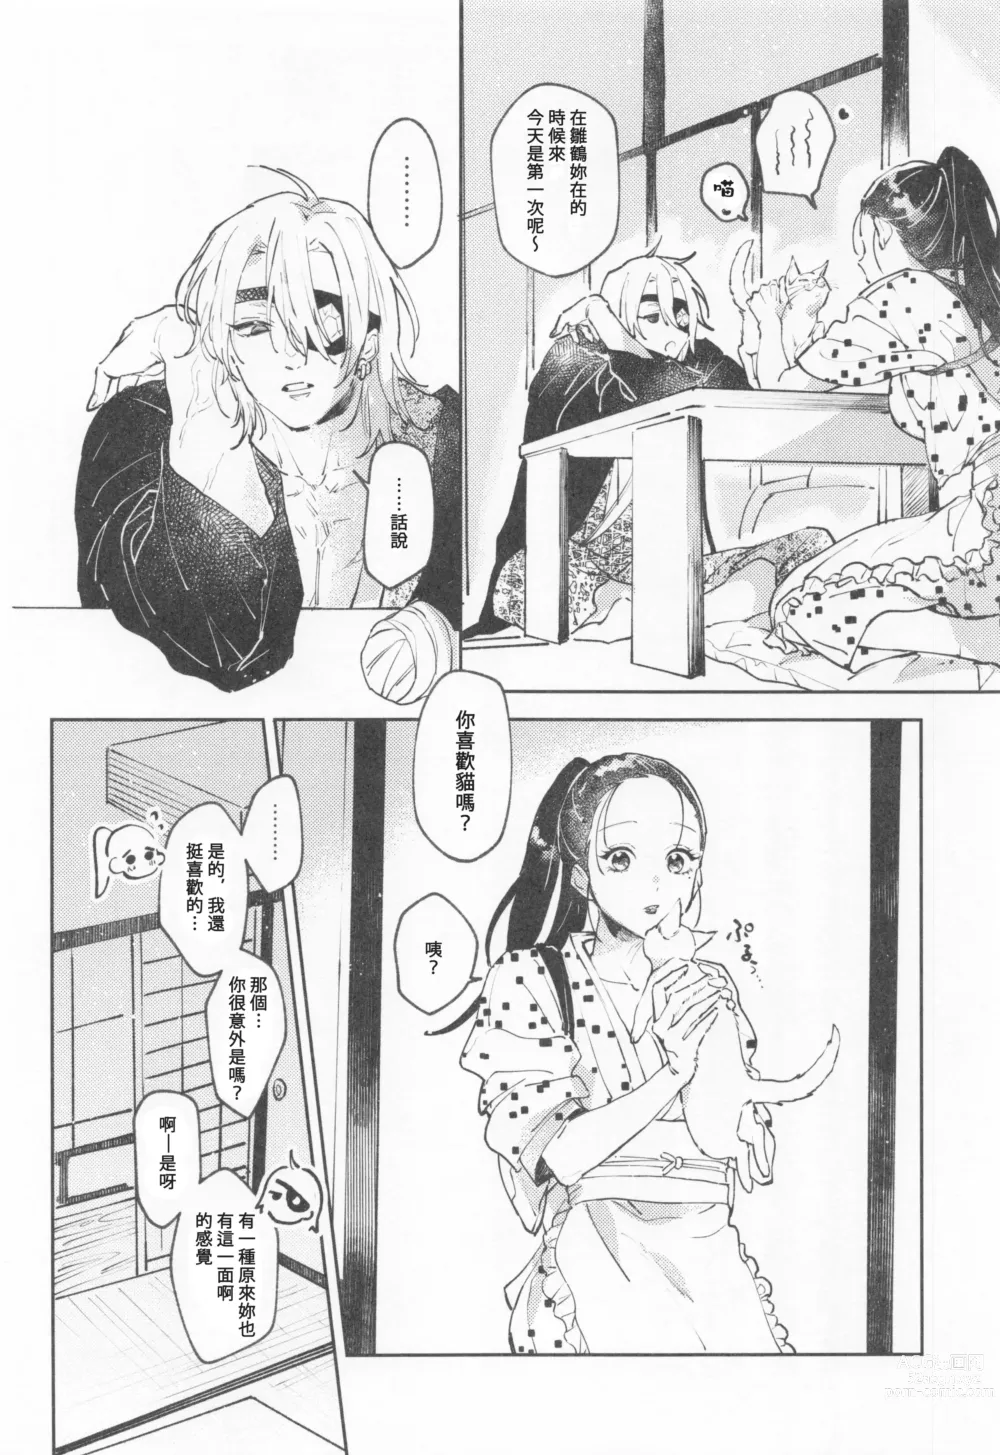 Page 5 of doujinshi H. - Cichidotto.